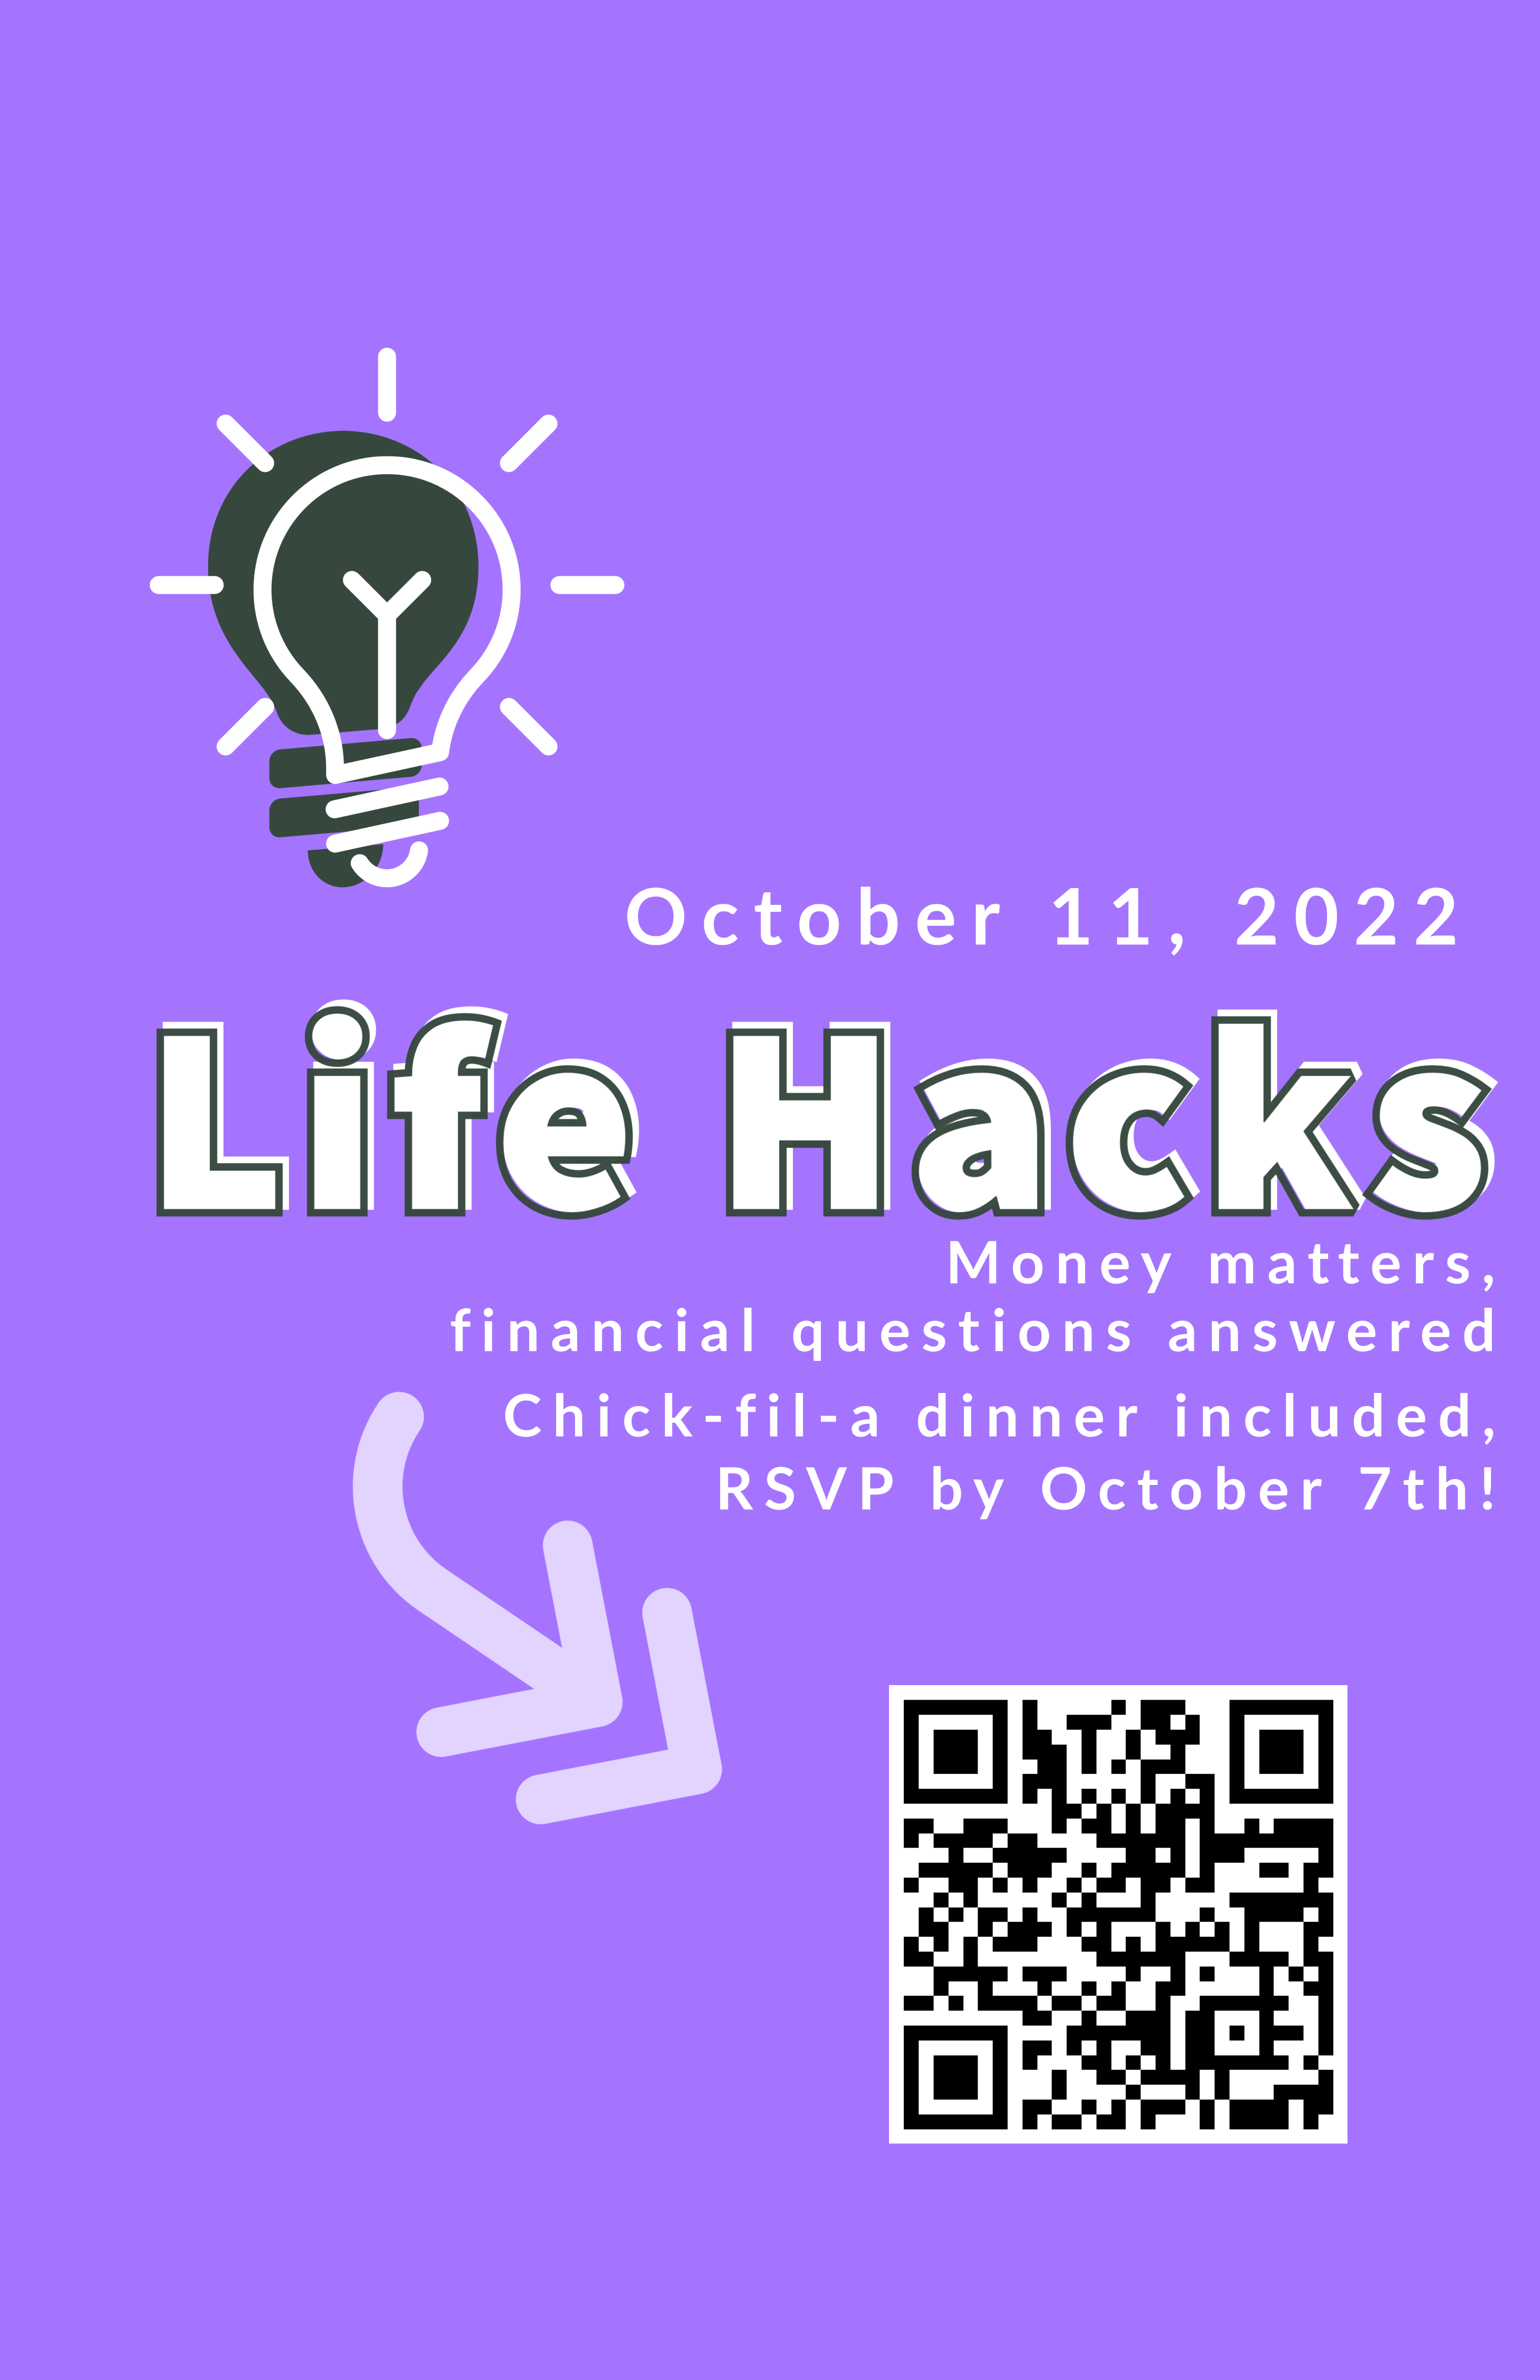 Life hacks poster